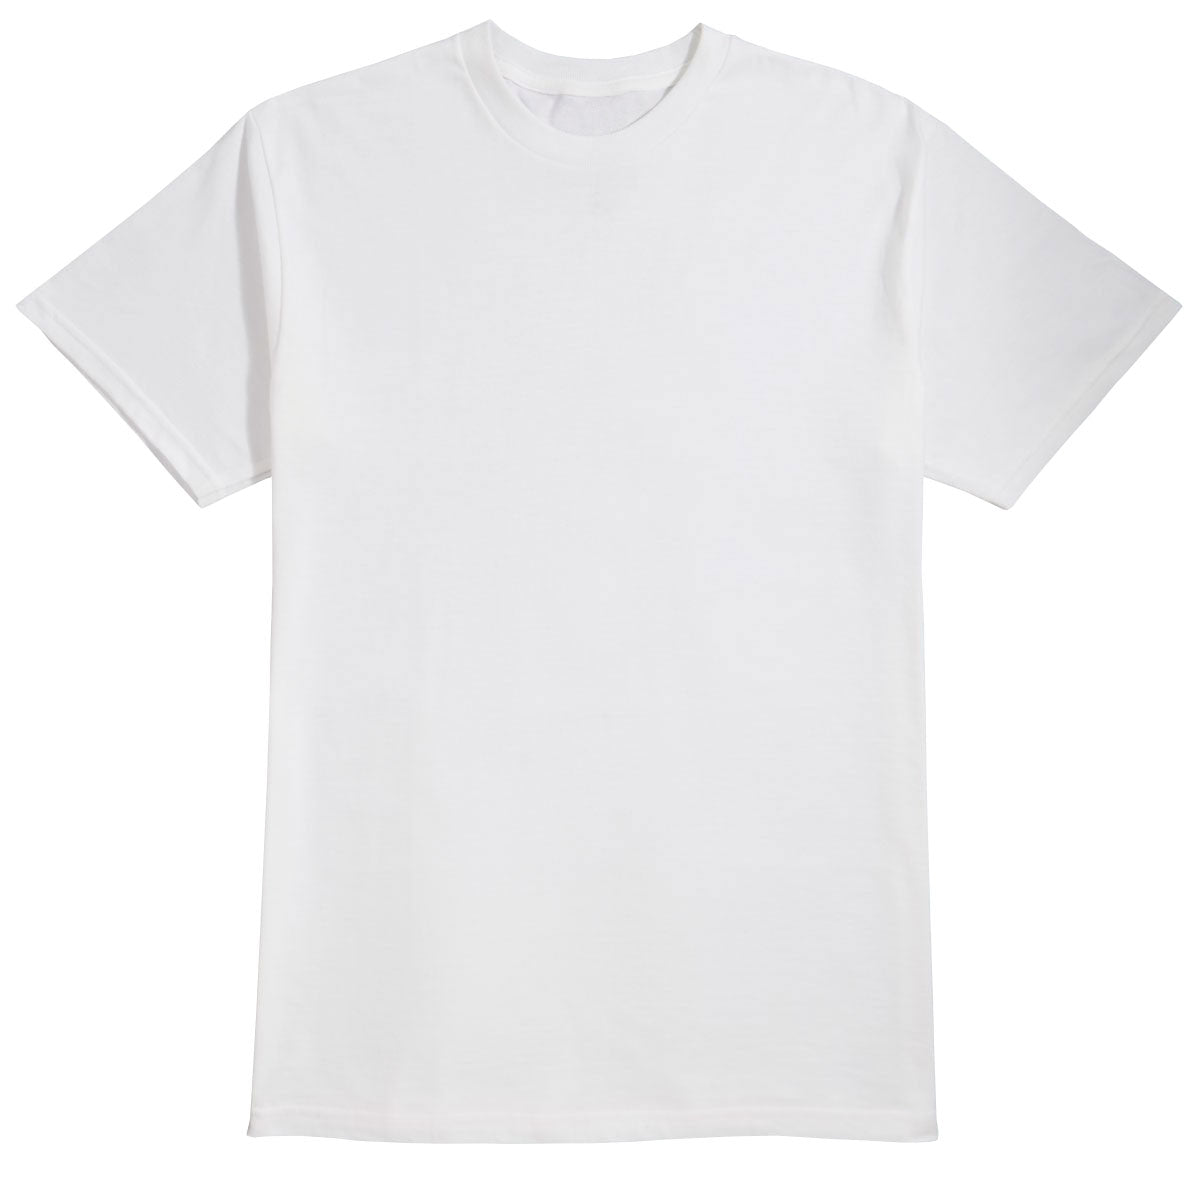 Alien Workshop Spectrum Color-Up T-Shirt - White - LG image 1